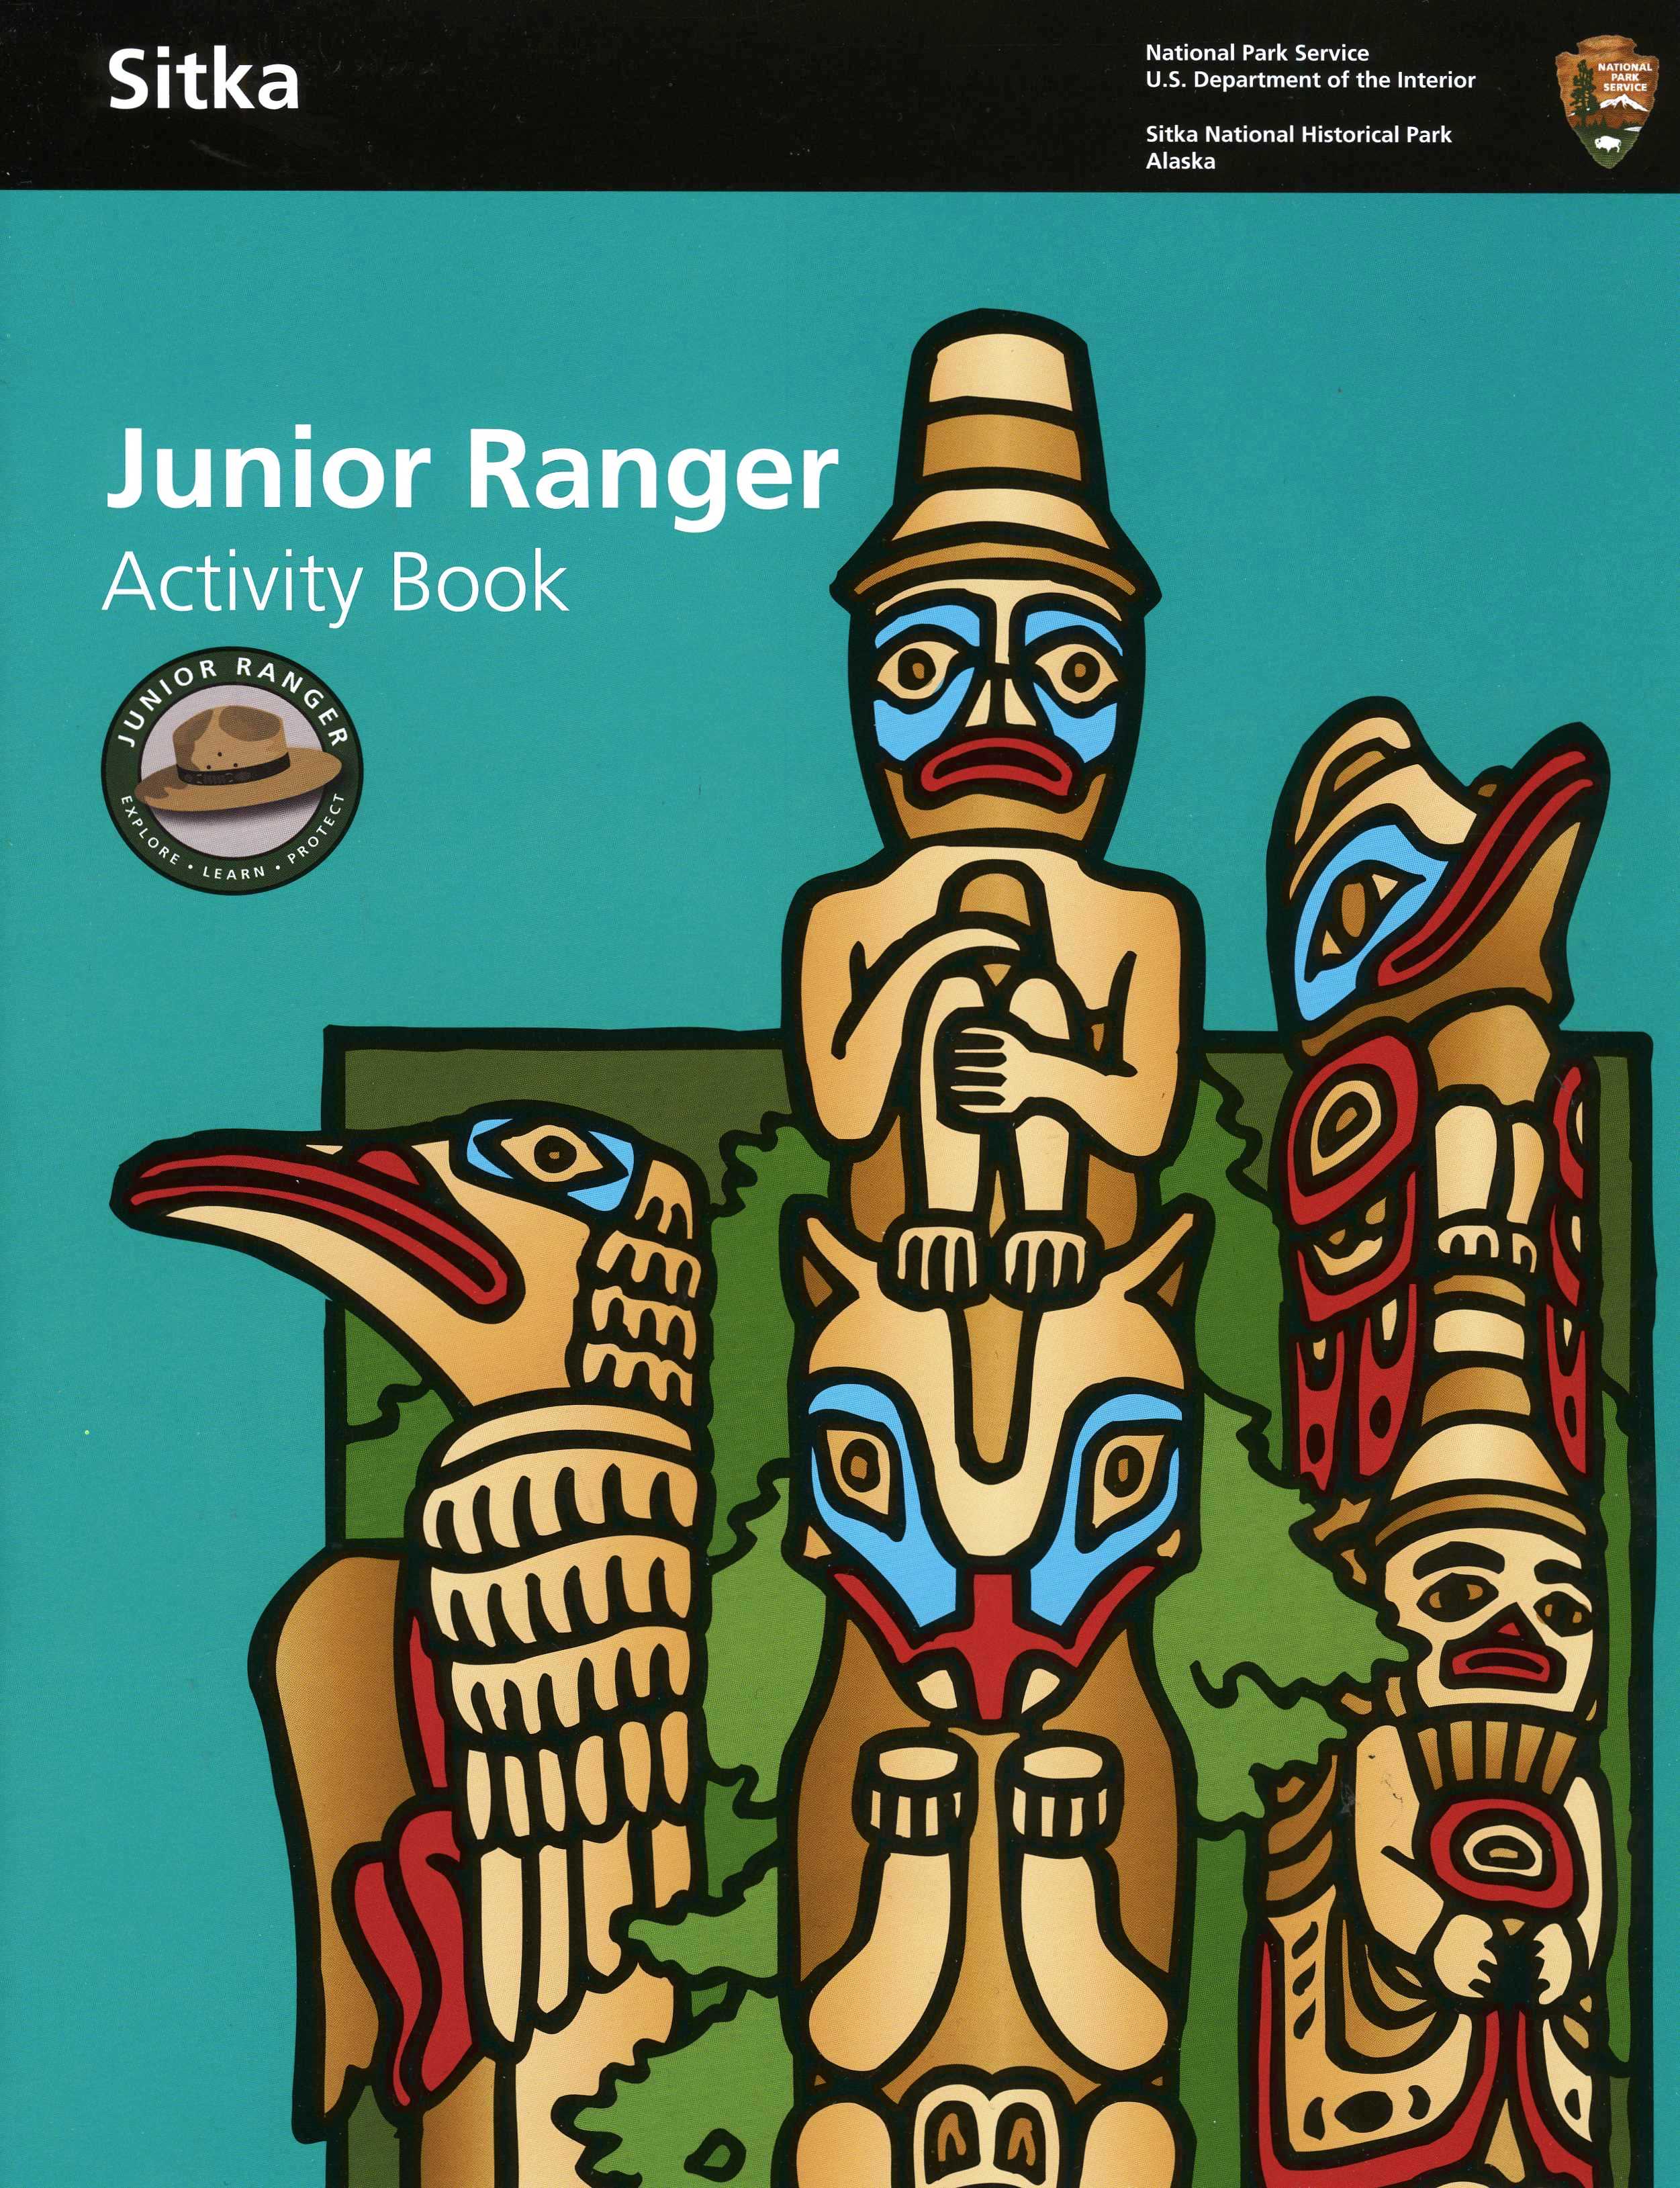 National Geographic Kids Junior Ranger Activity Book – Joshua Tree